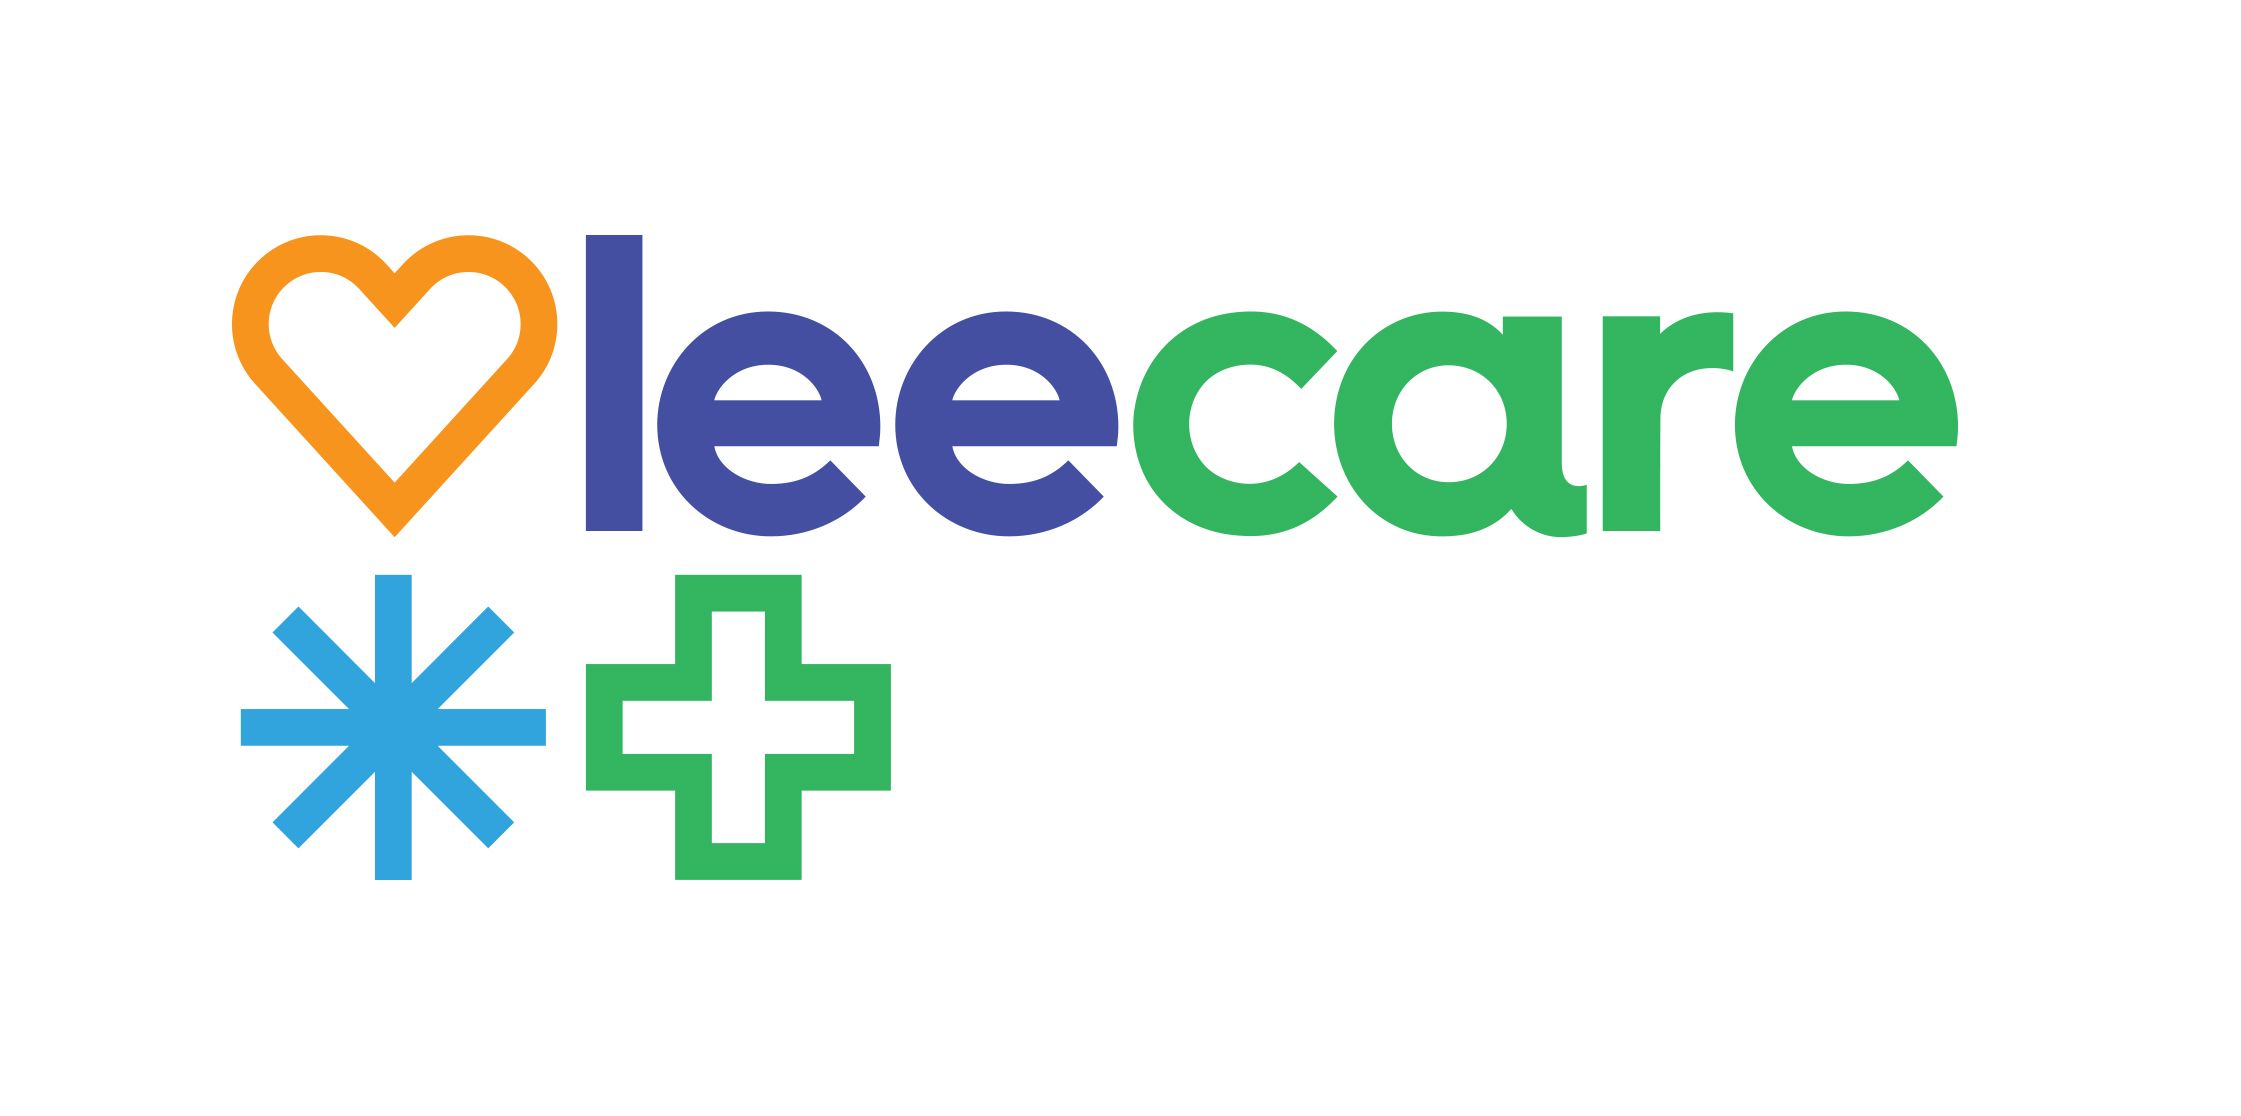 Leecare Solutions Pty